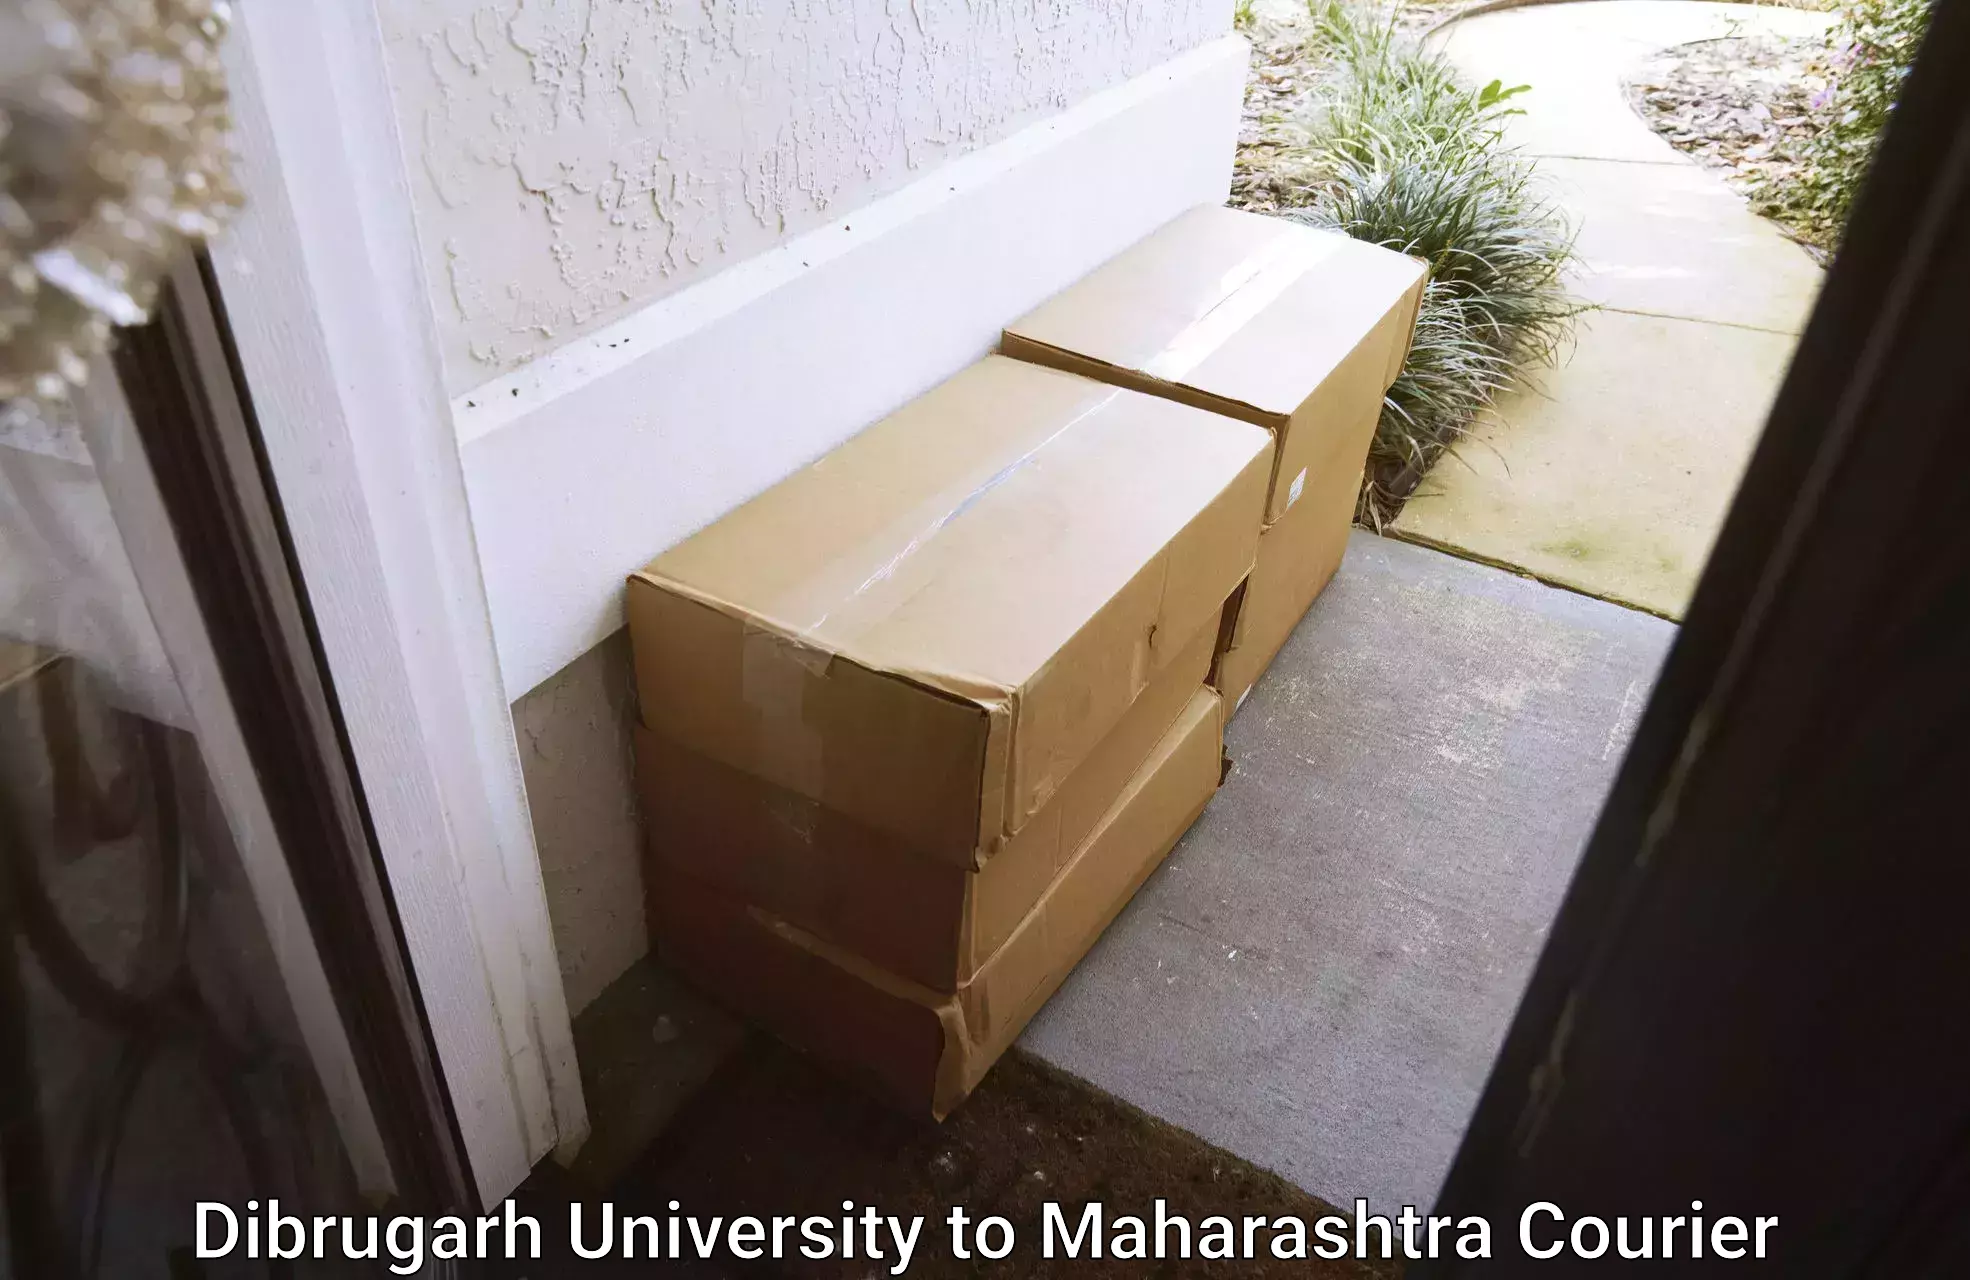 High-capacity parcel service Dibrugarh University to Yeola